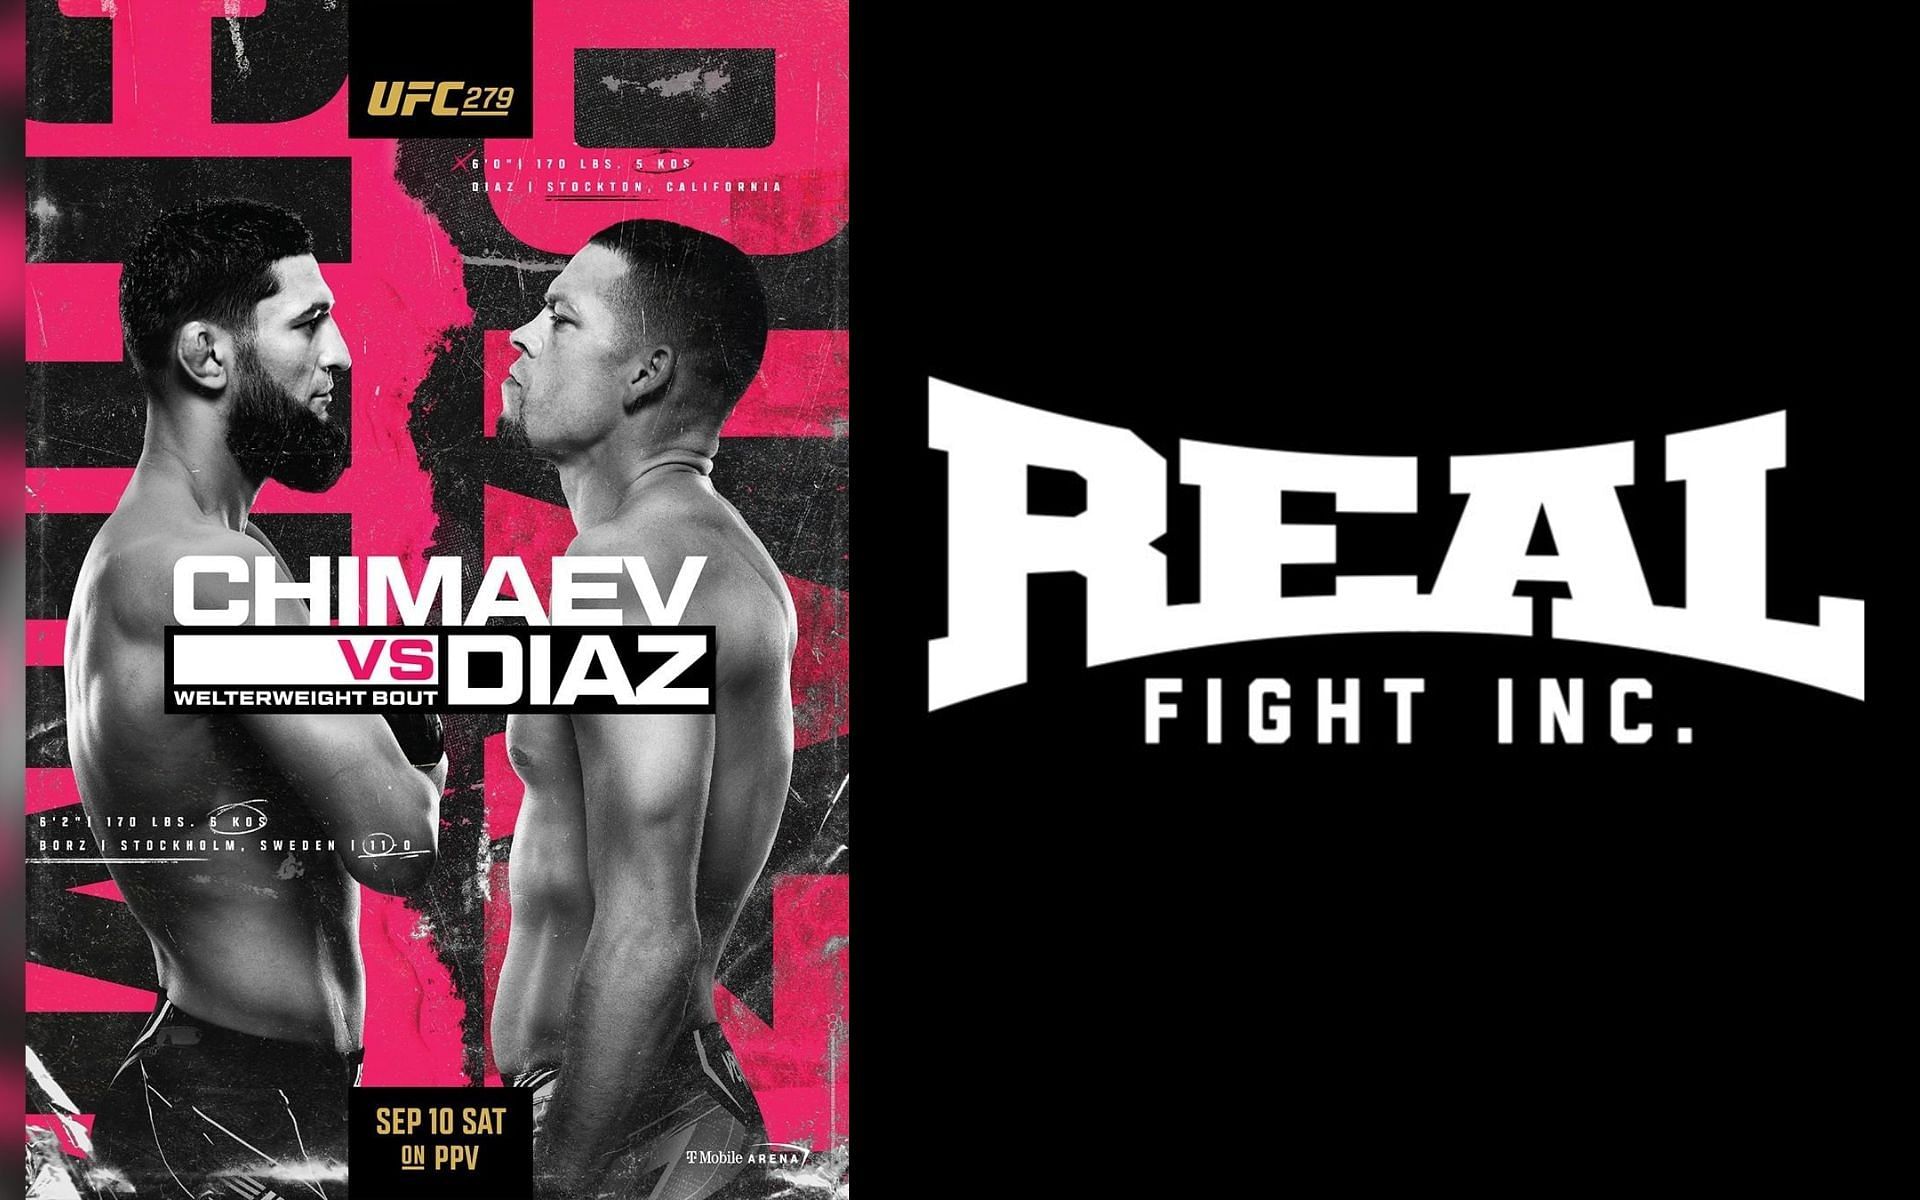 Khamzat Chimaev vs Nate Diaz (Left) Real Fight Inc. (Right) [ Images via @ufc on Instagram and @arielhelwani on Twitter]